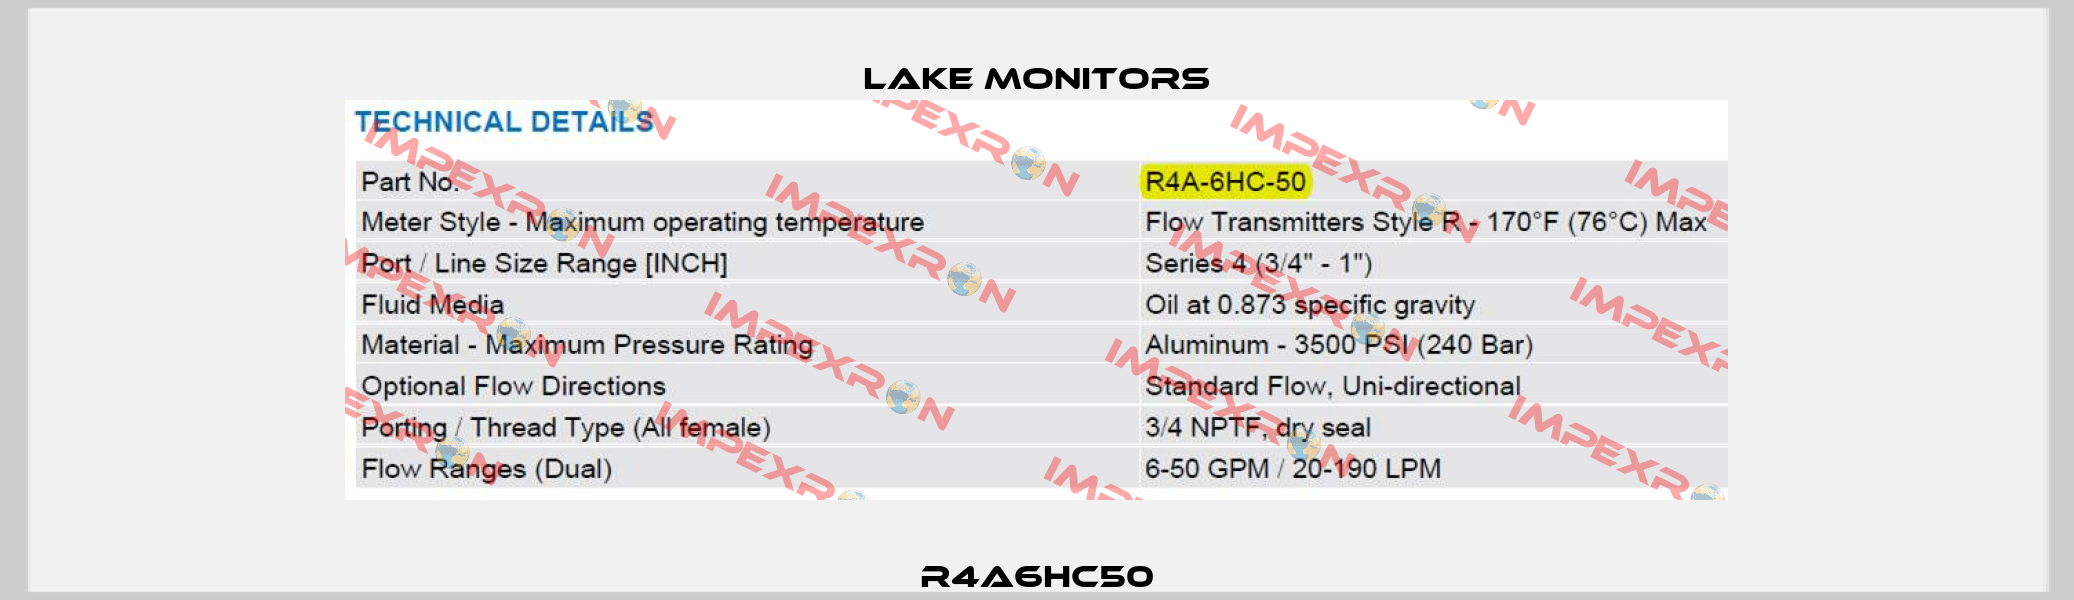 R4A6HC50 Lake Monitors